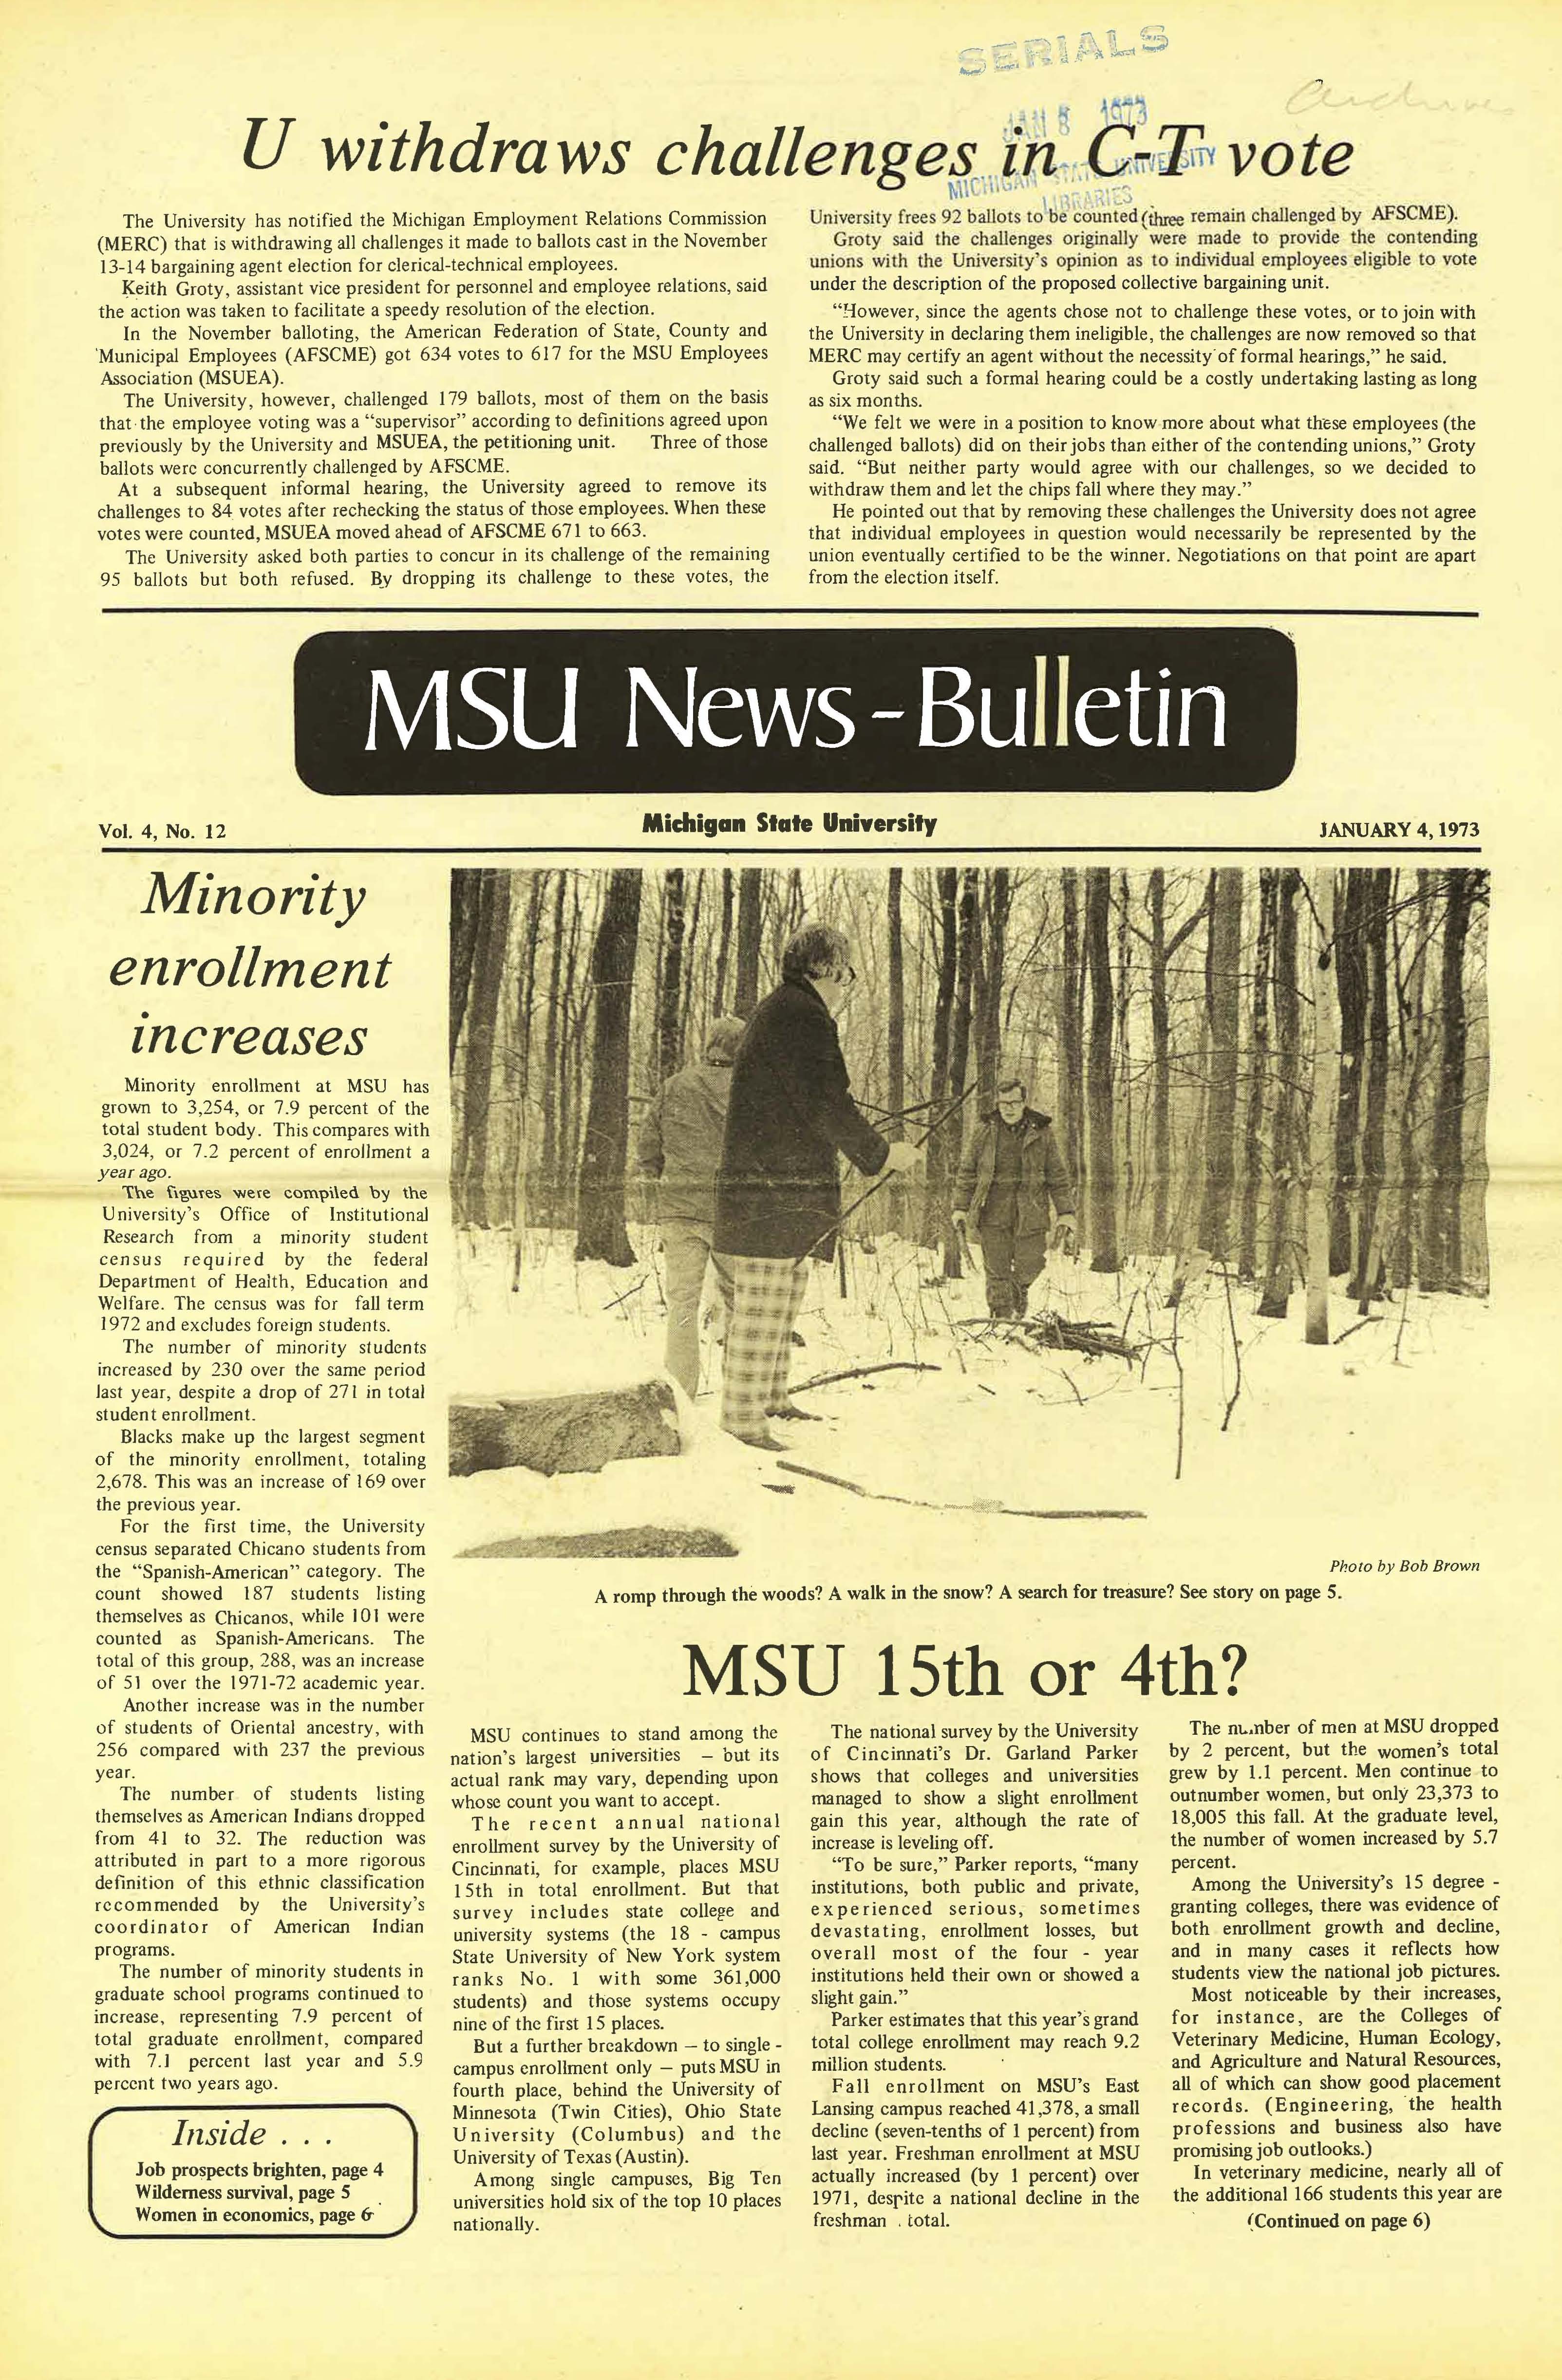 MSU News Bulletin, vol. 4, No. 15, January 25, 1973